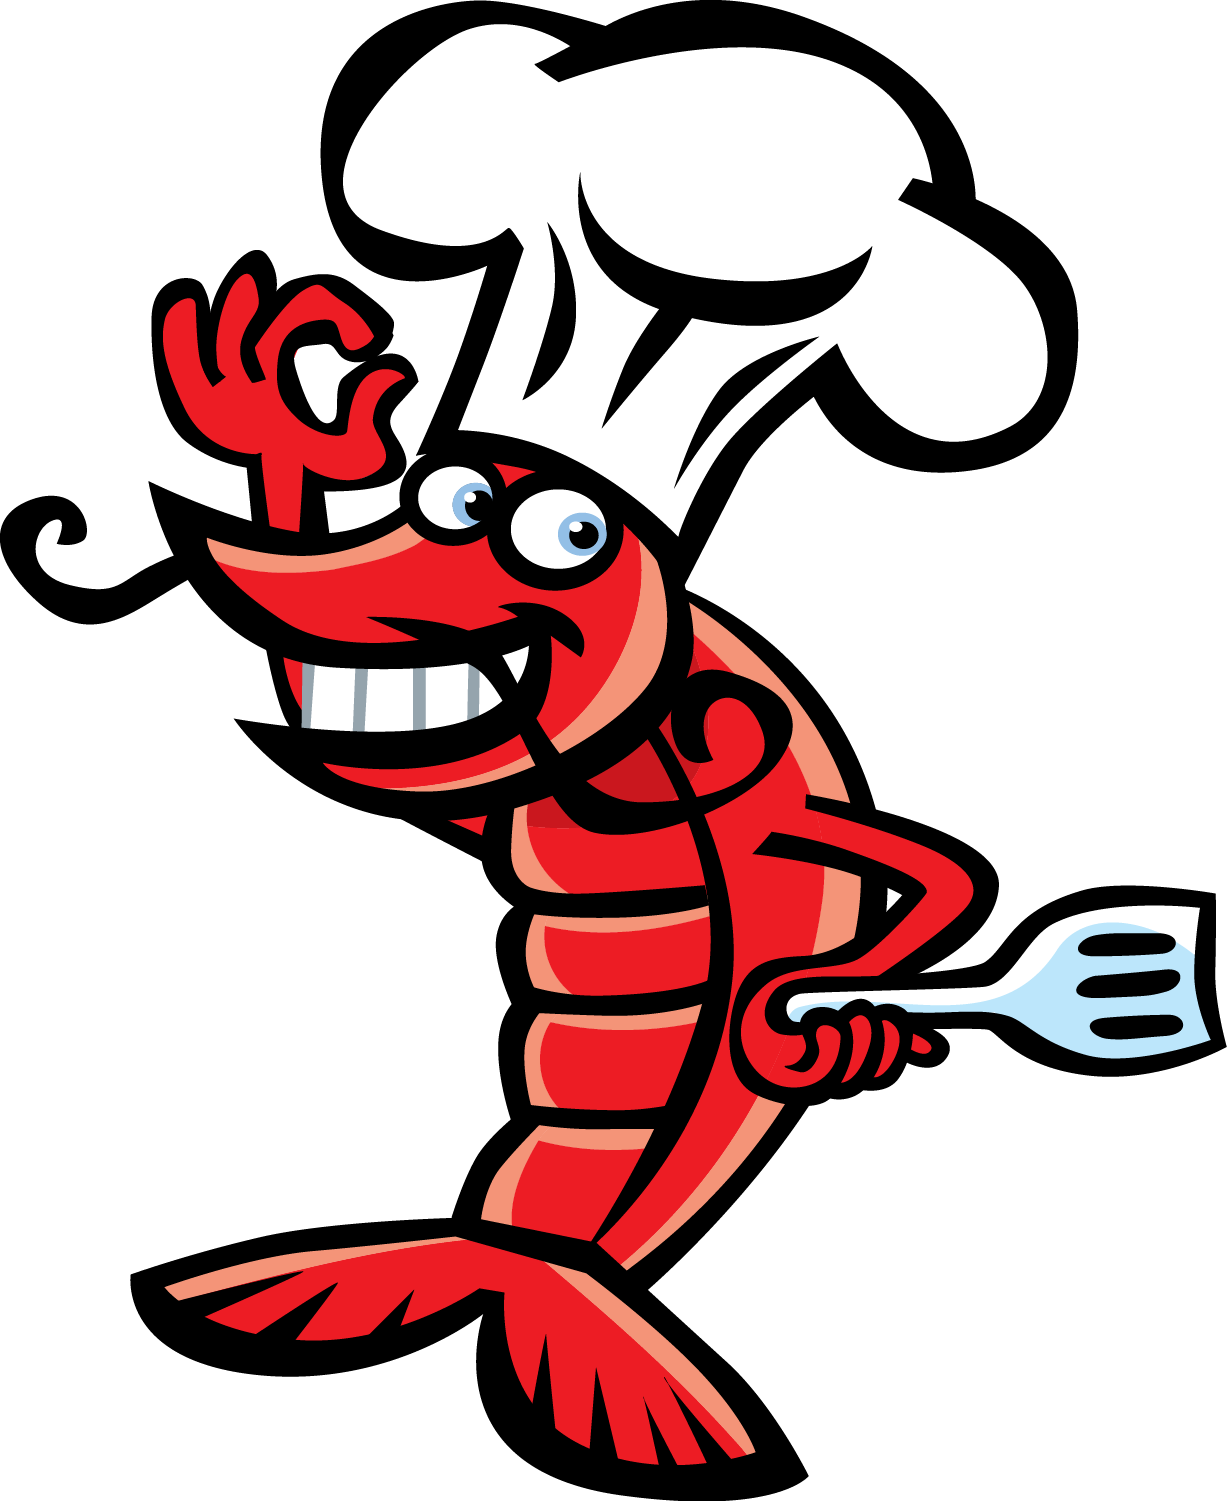 Shrimp clipart of shrimp free download wmf